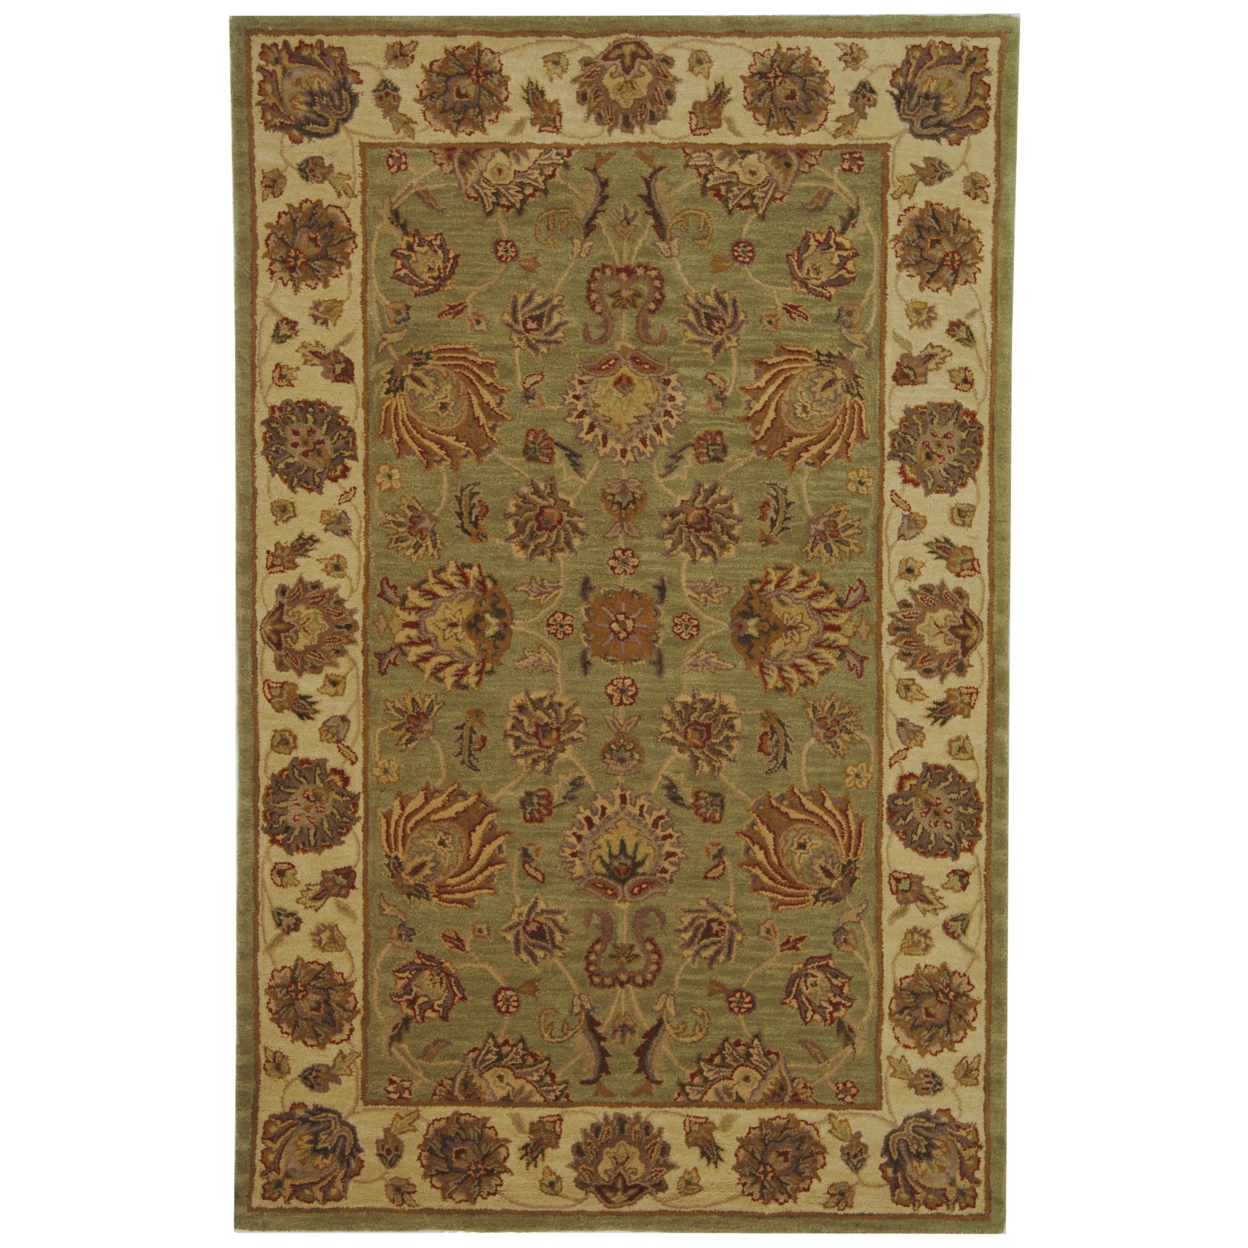 SAFAVIEH Heritage Regis Traditional Wool Area Rug, Green/Gold, 5' x 8' - image 1 of 10